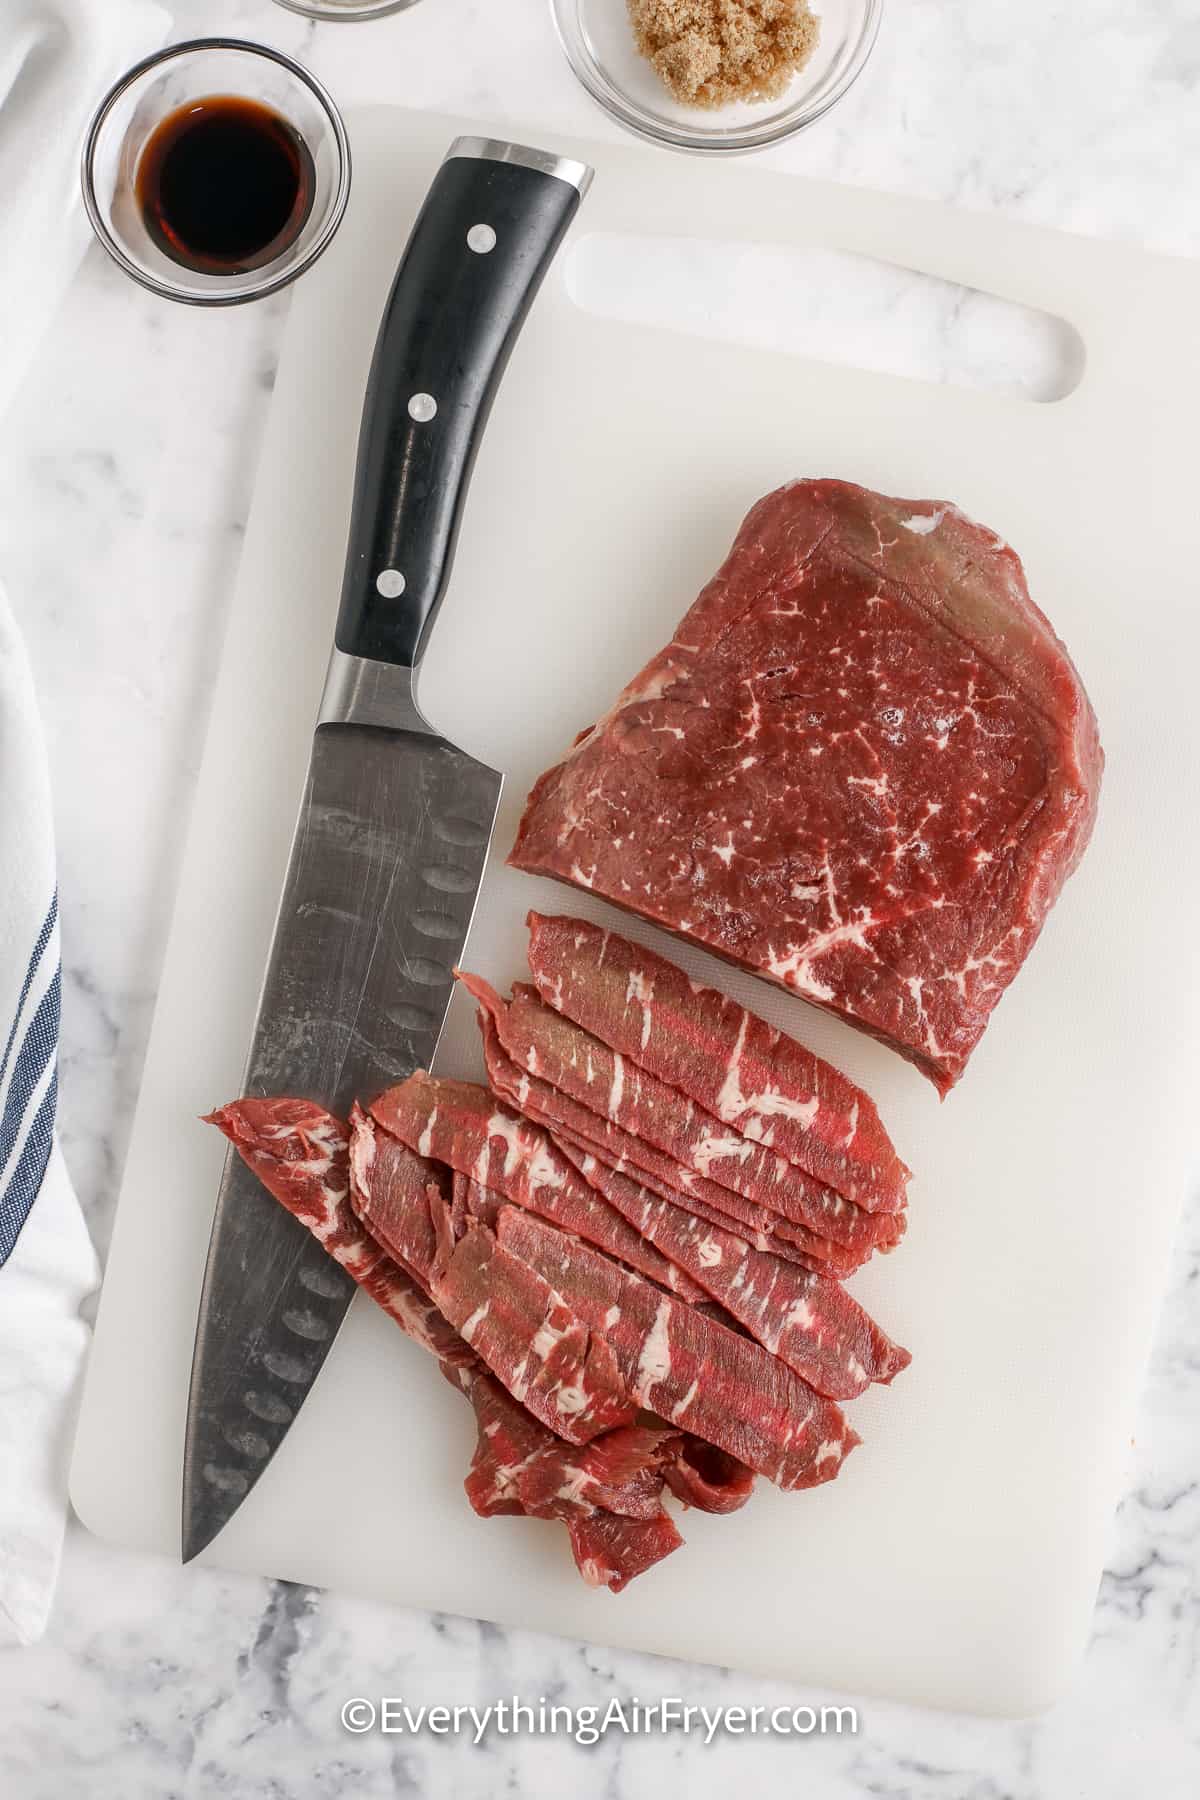 steak being sliced on a cutting board